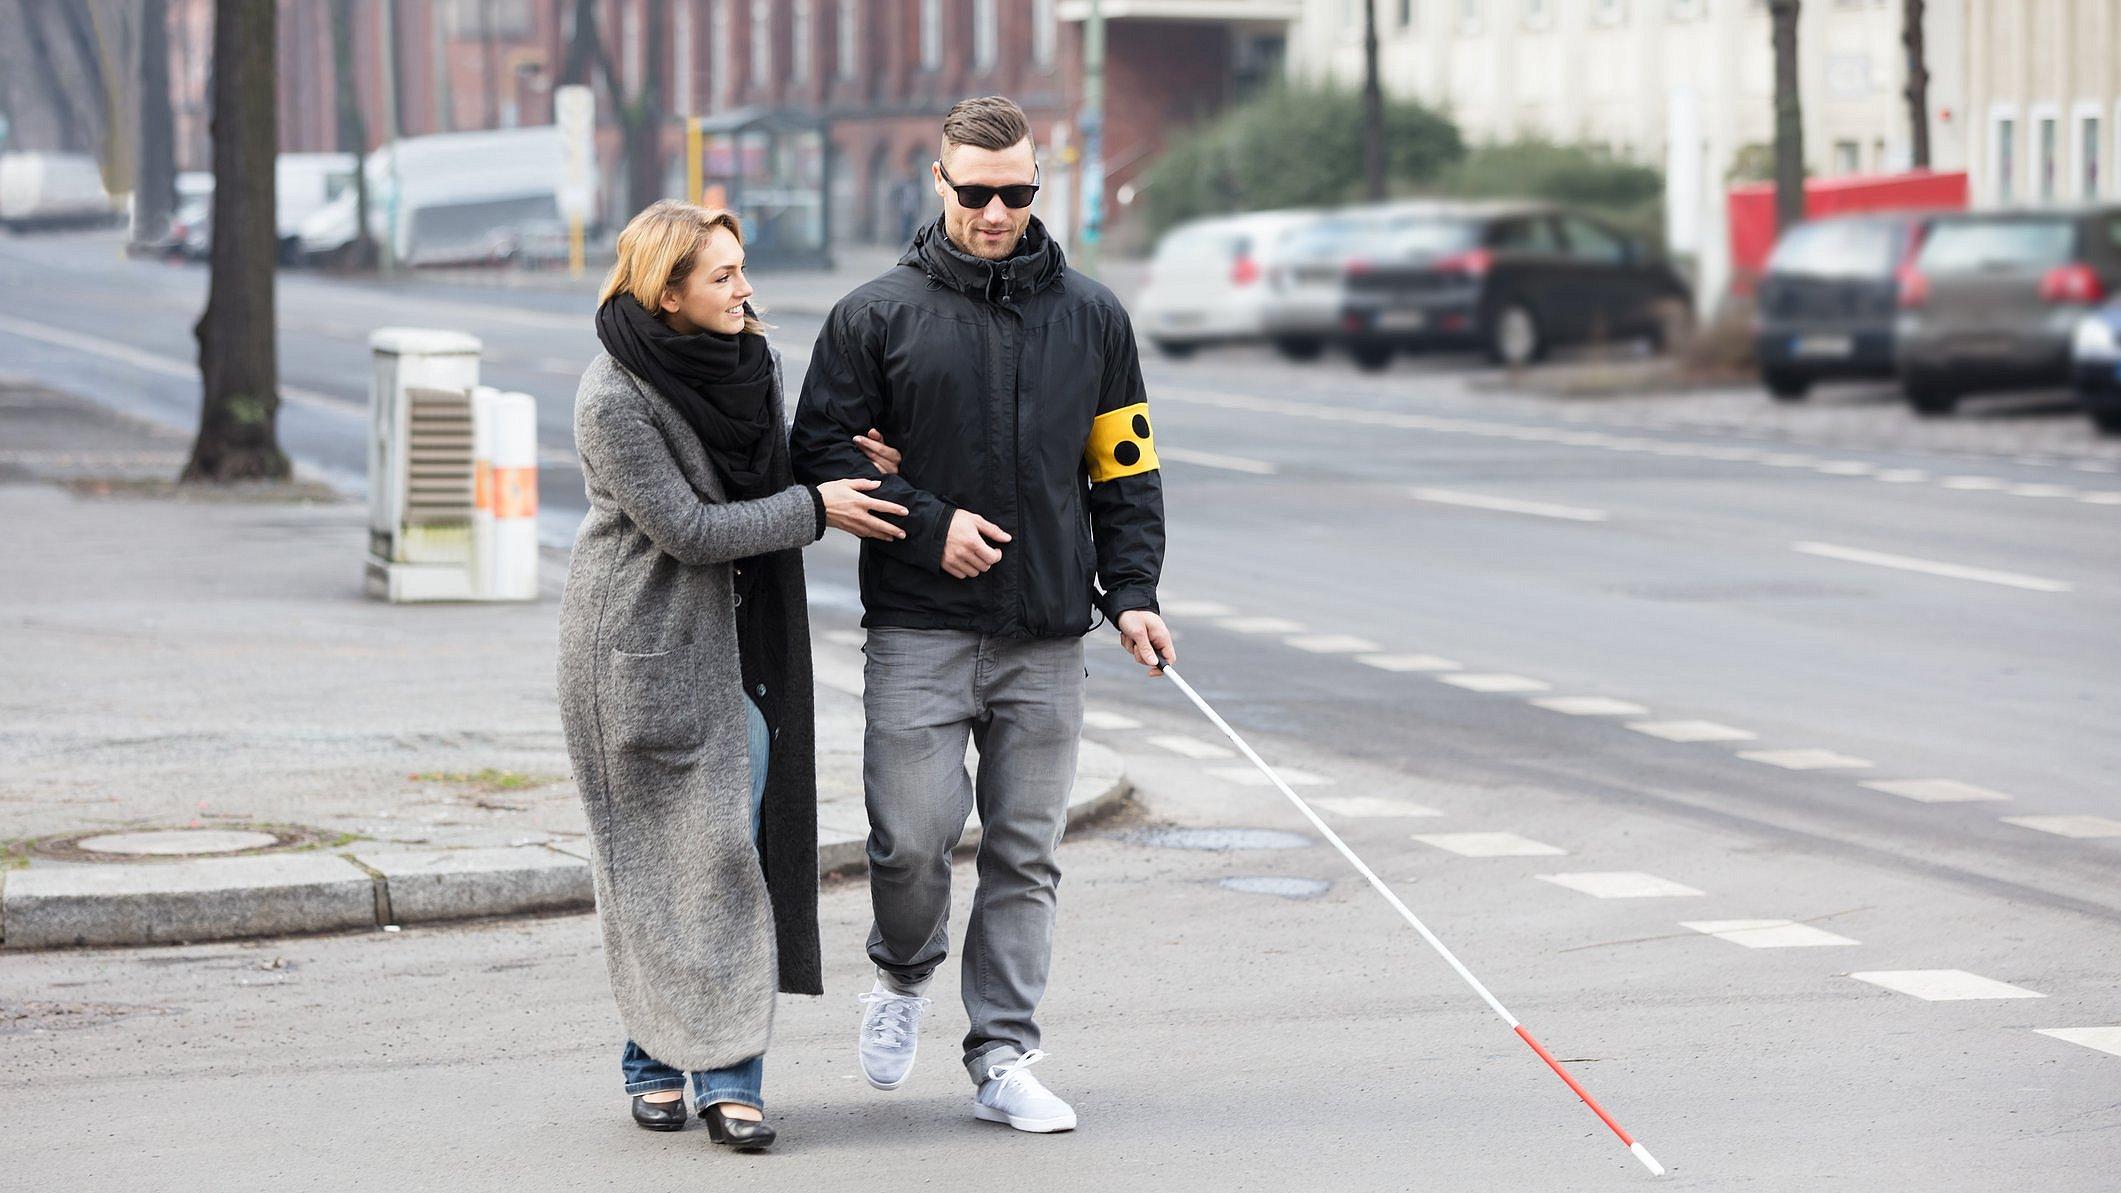 Frau hilft blindem Mann über die Straße